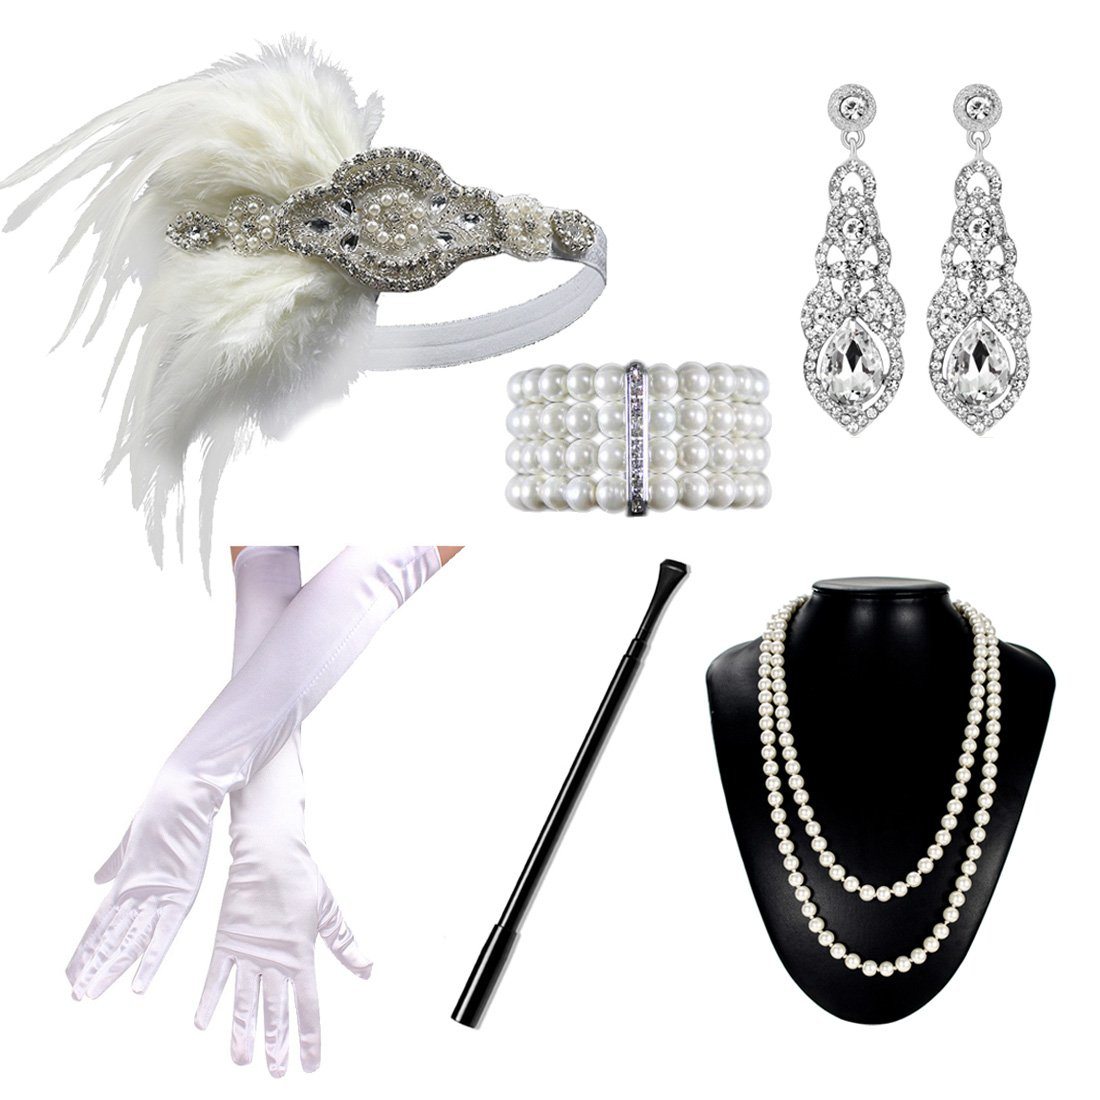 Roaring Twenties Jewelry and Accessories Set